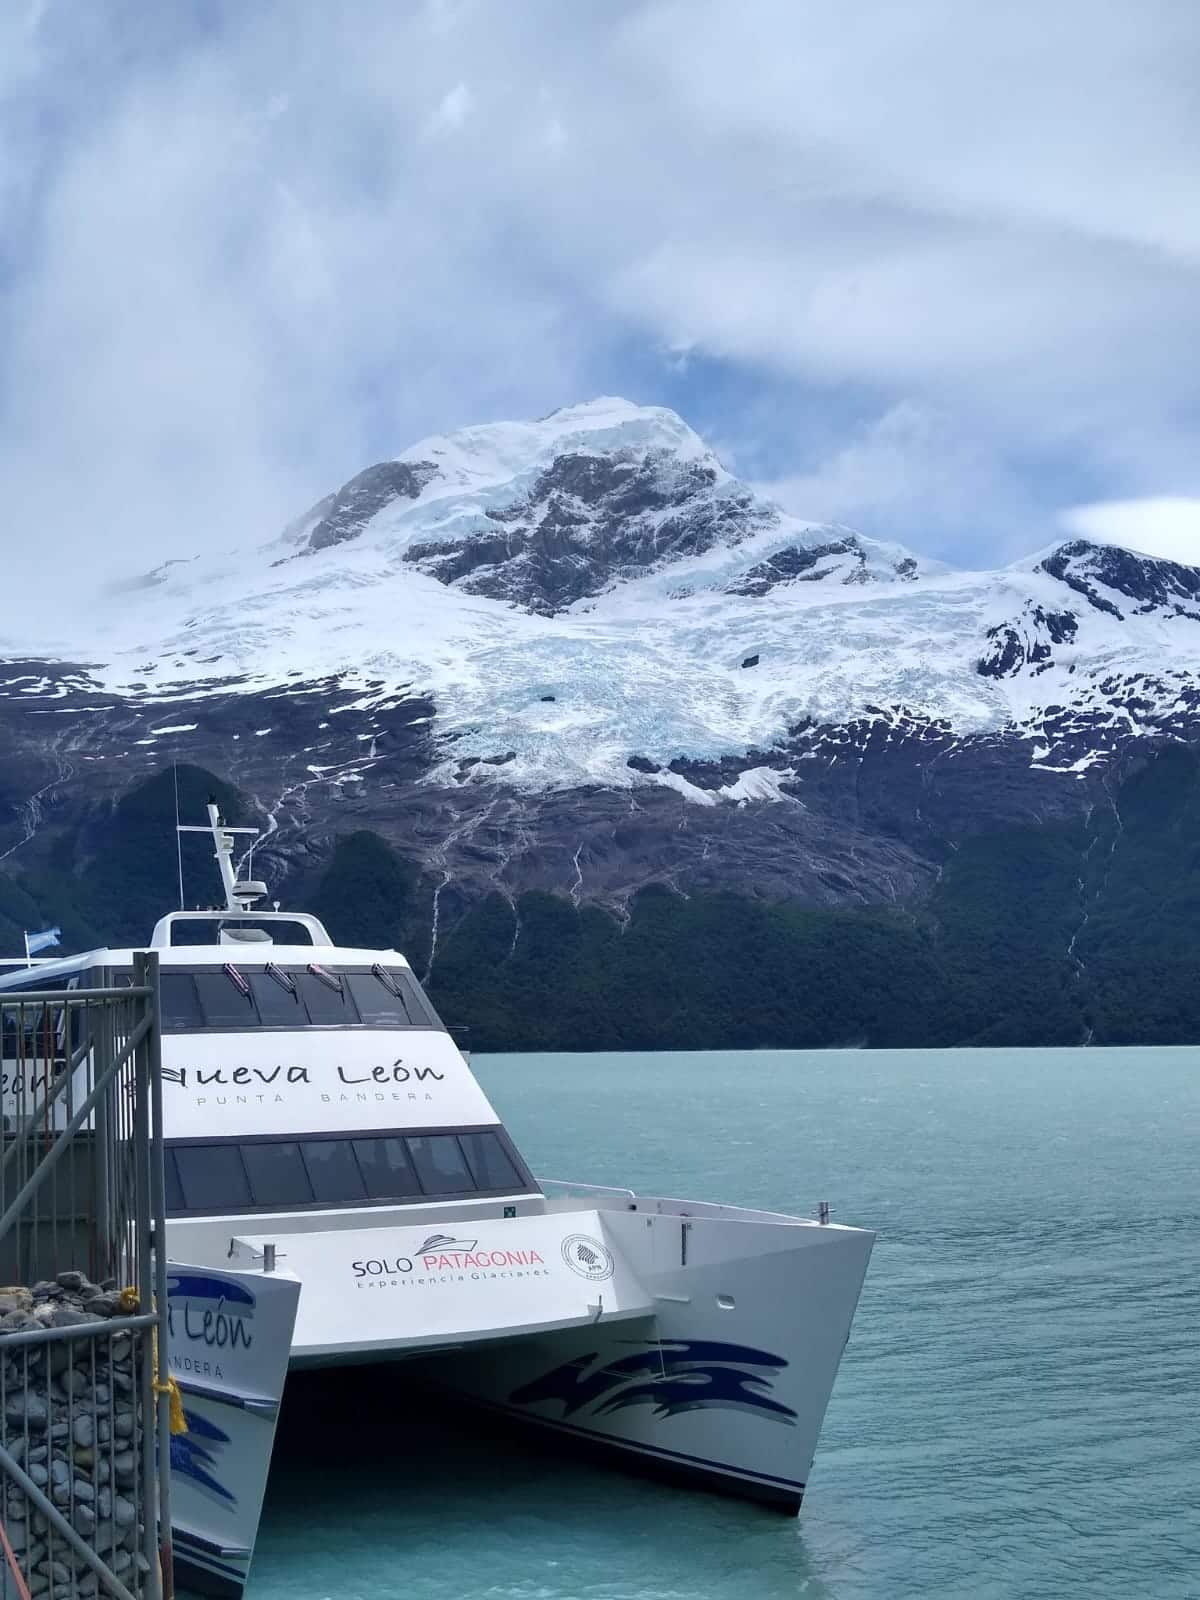 Excursion navegar glaciar perito moreno